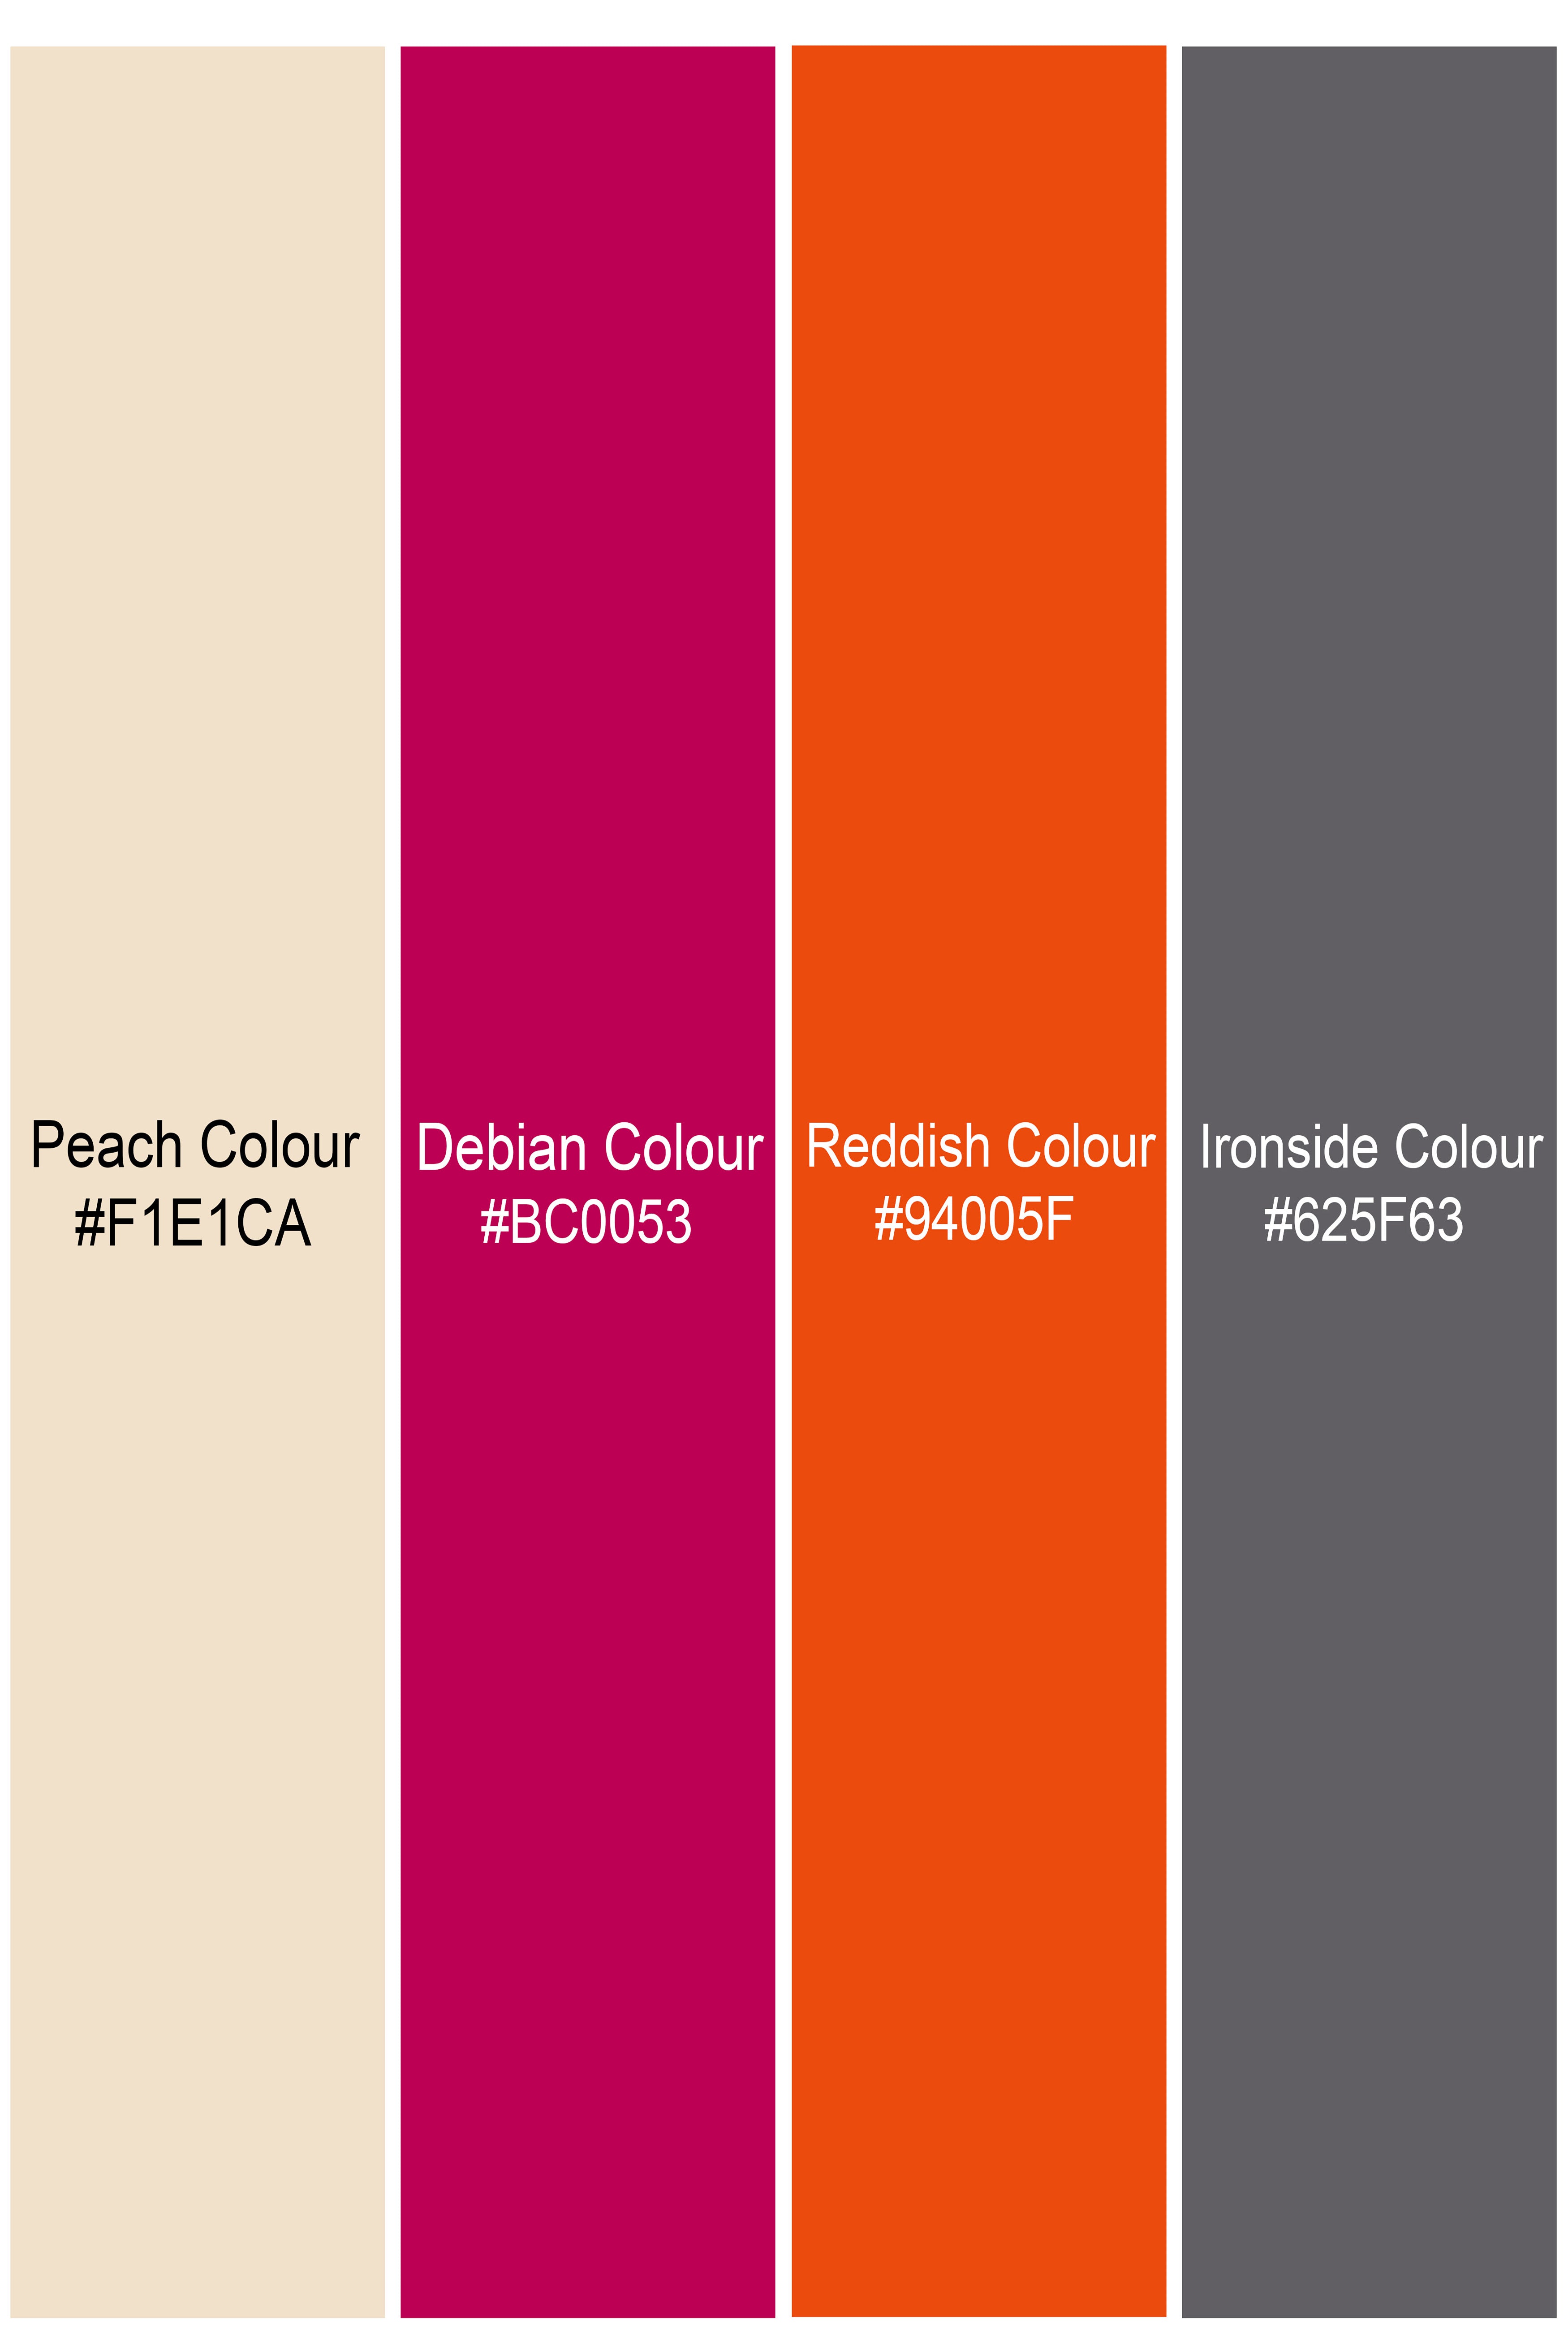 Peach with Debian Pink Multicolour Striped Lightweight Premium Cotton Oversized Shirt